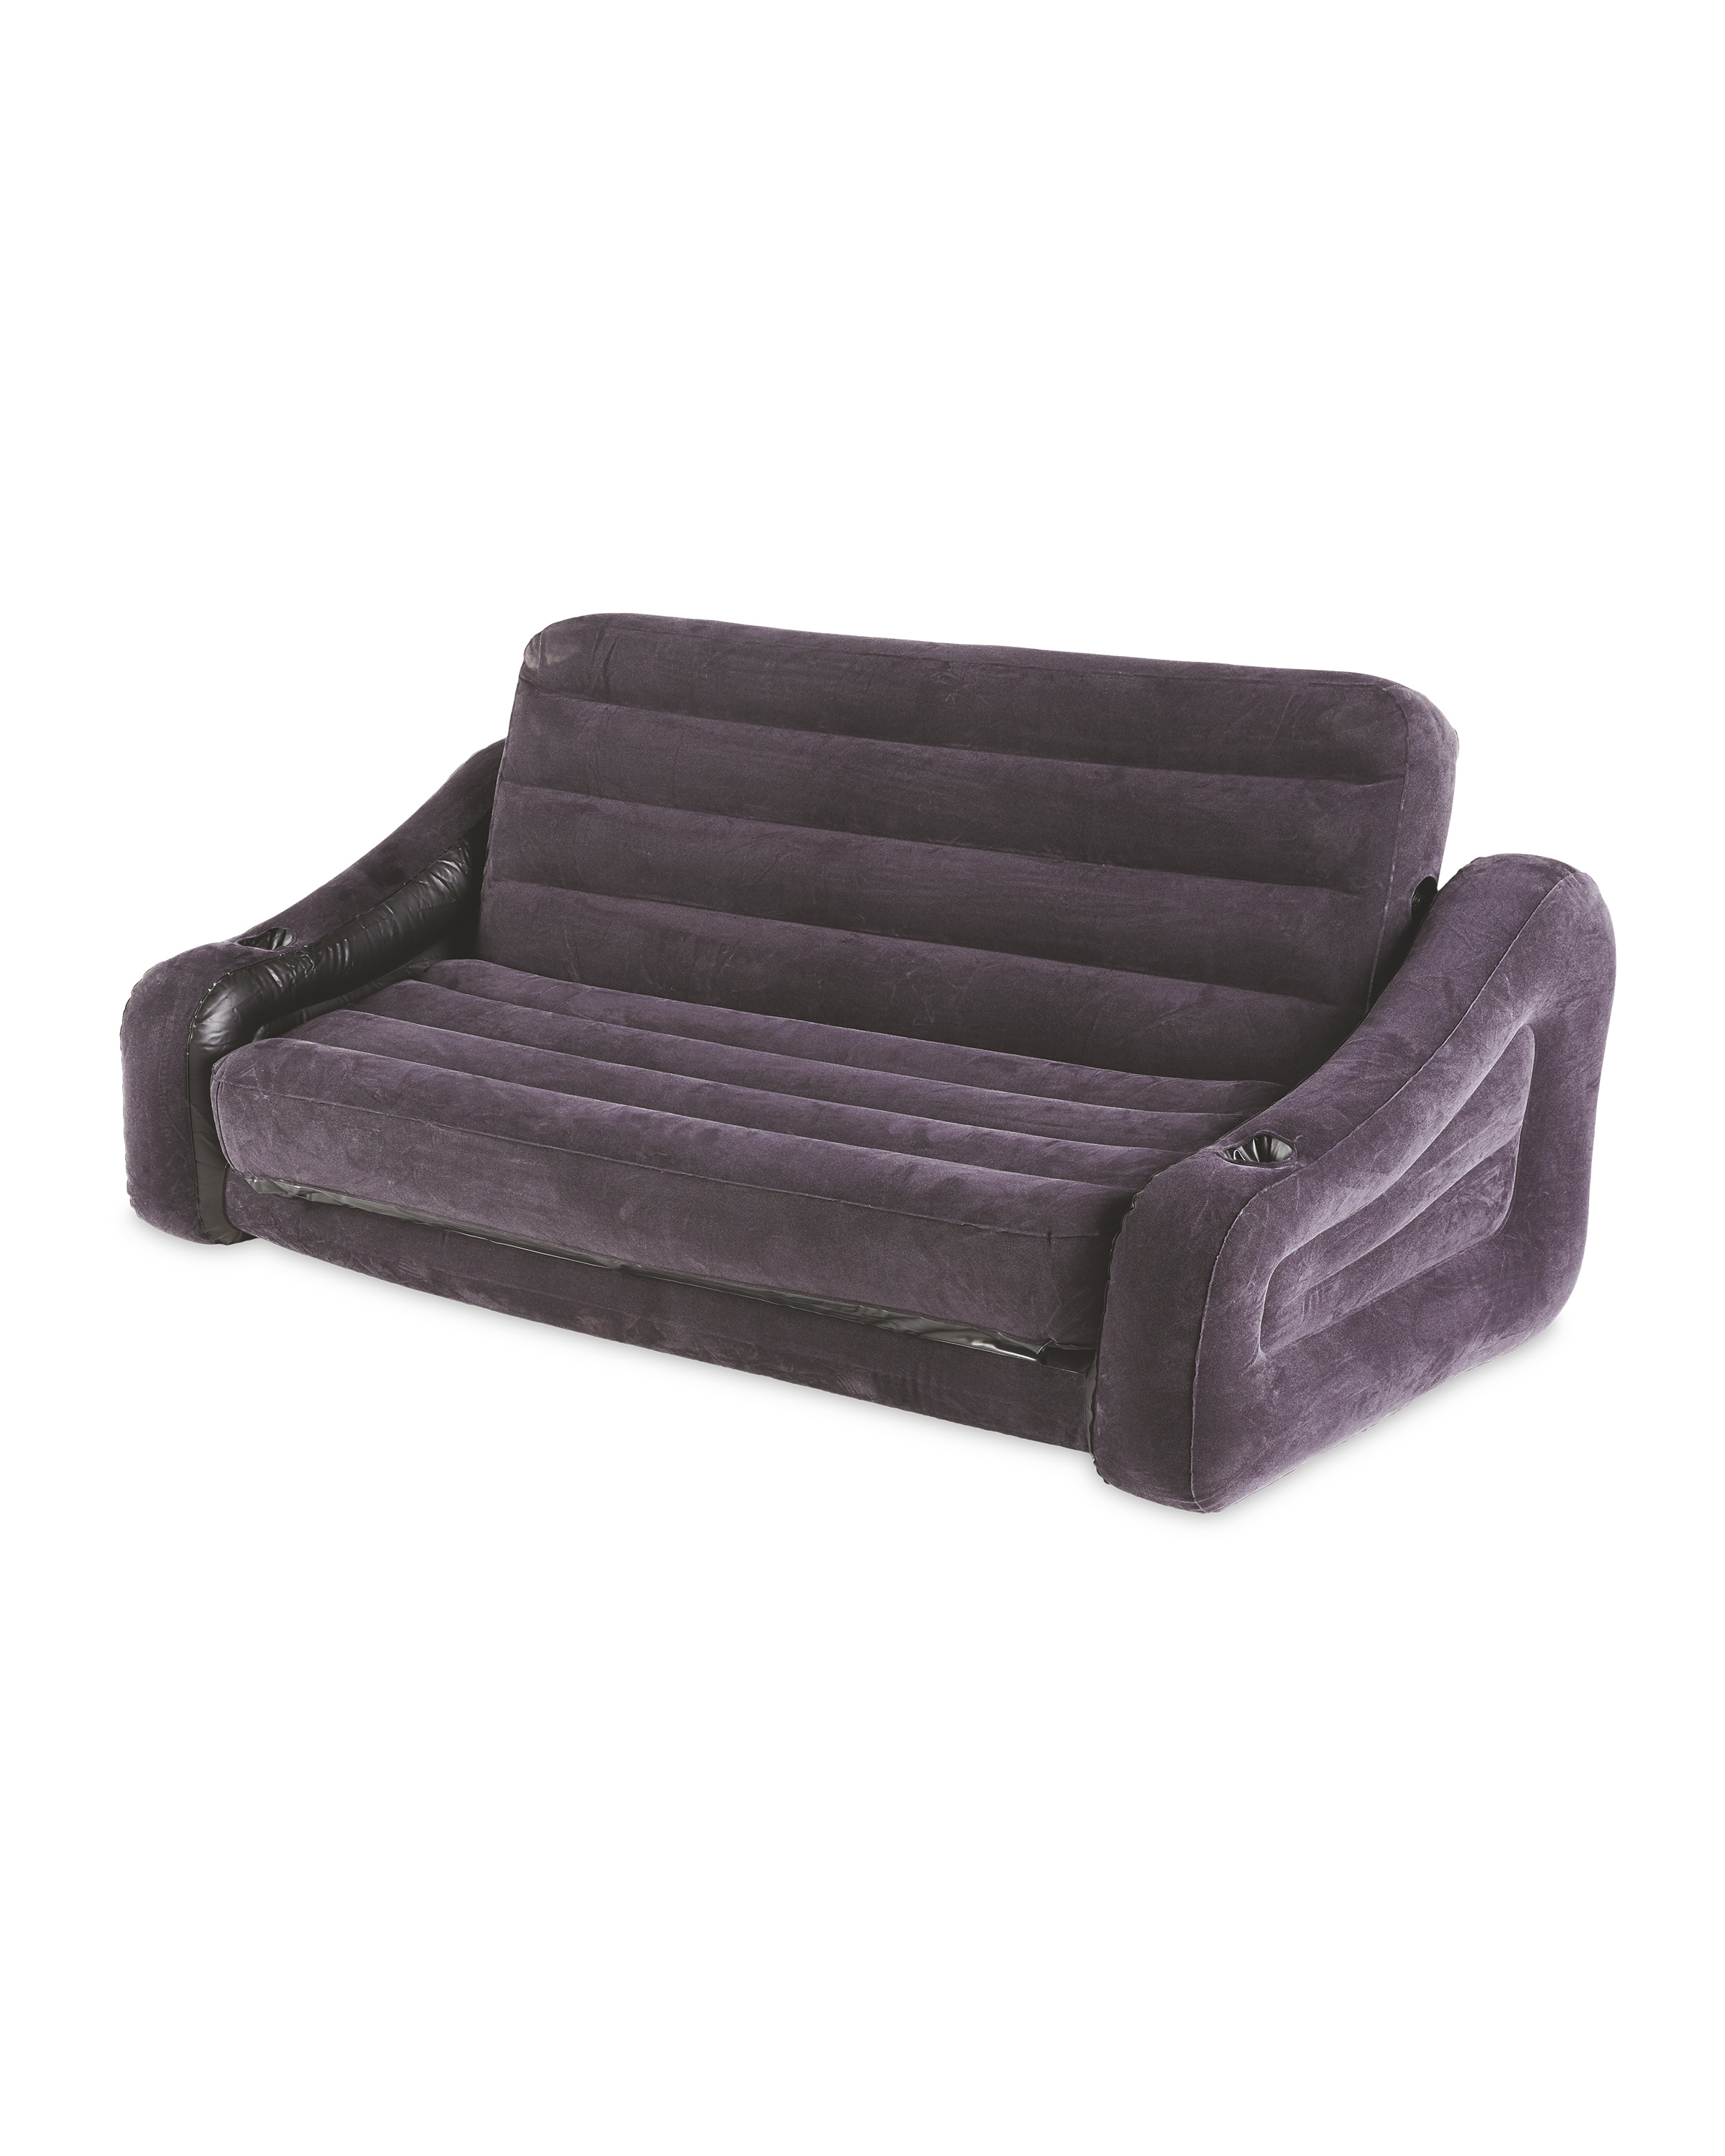 Inflatable Sofa Bed, Intex Pull Out Sofa Uk